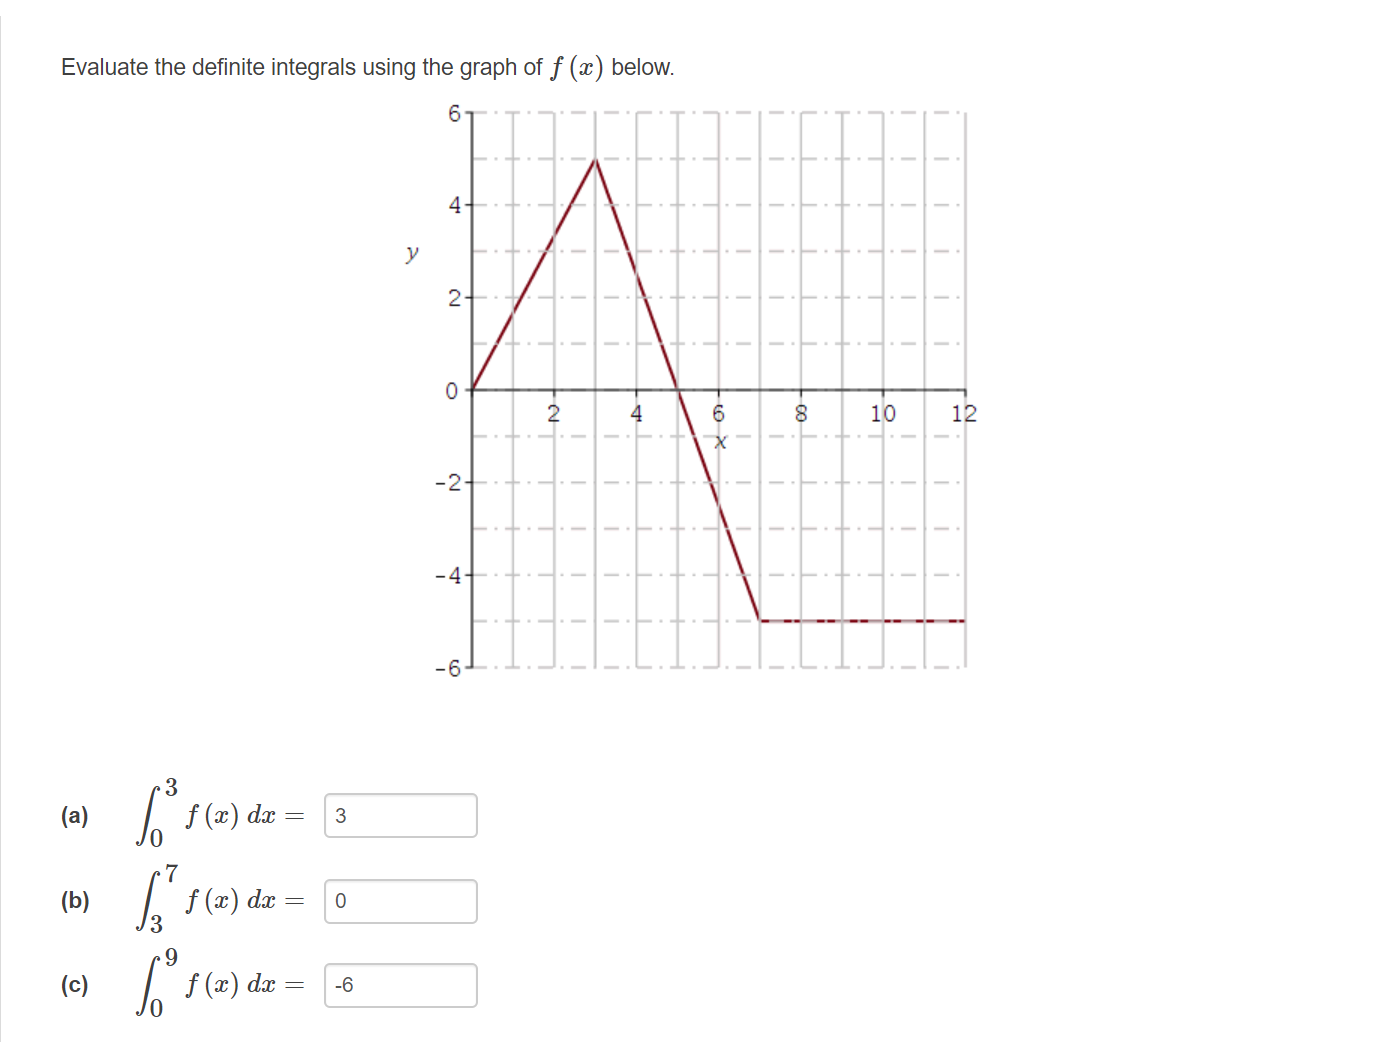 Evaluate the definite integrals using the graph of f () below.
6.
4-
y
2
4
10
12
-4
-6·
3
(a)
| f (x) dæ = 3
7
I'5(2) dar = 0
(b)
9
(c)
f (x) dx
-6
2.
